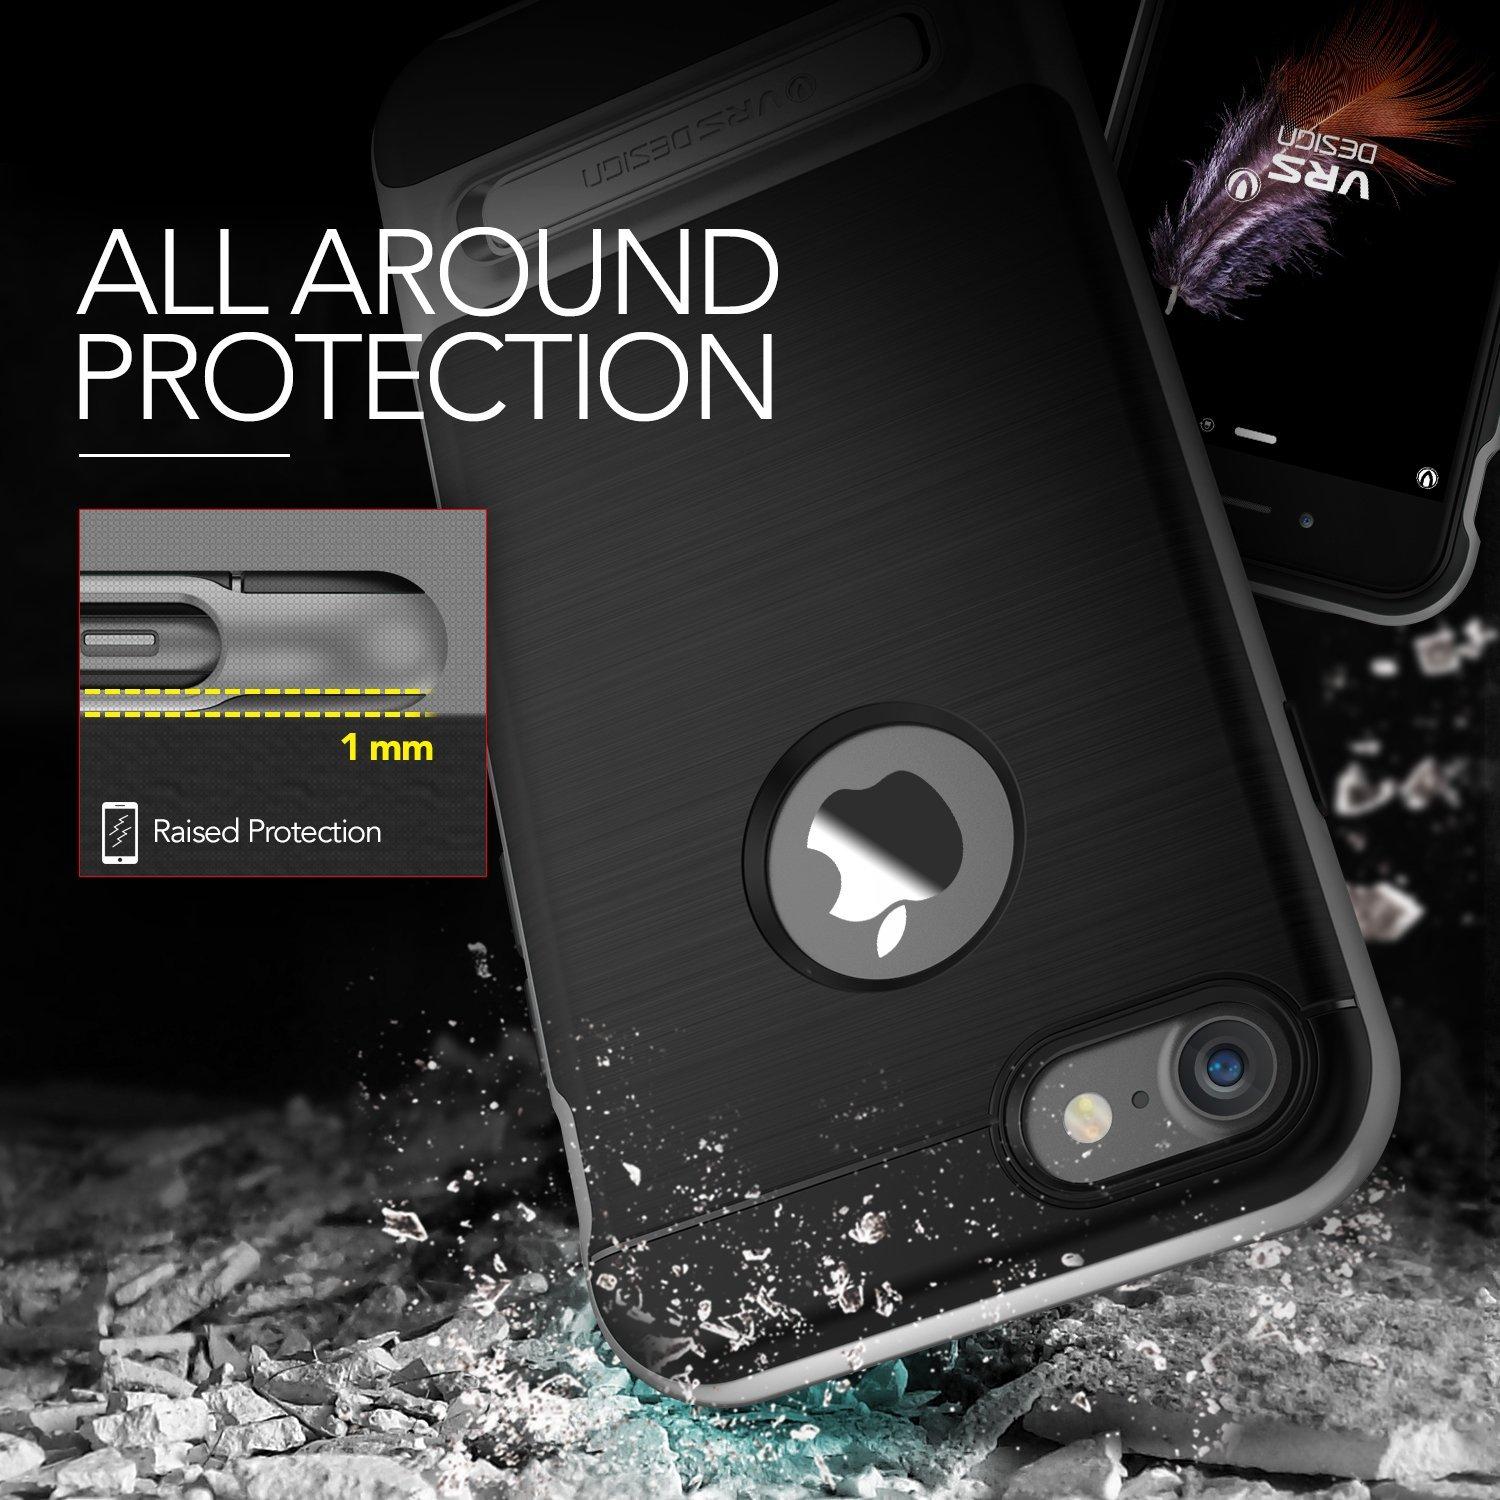 VRS Design High Pro SHIELD Slim Kickstand Case iPhone 7 iPhone 8 Steel Silver